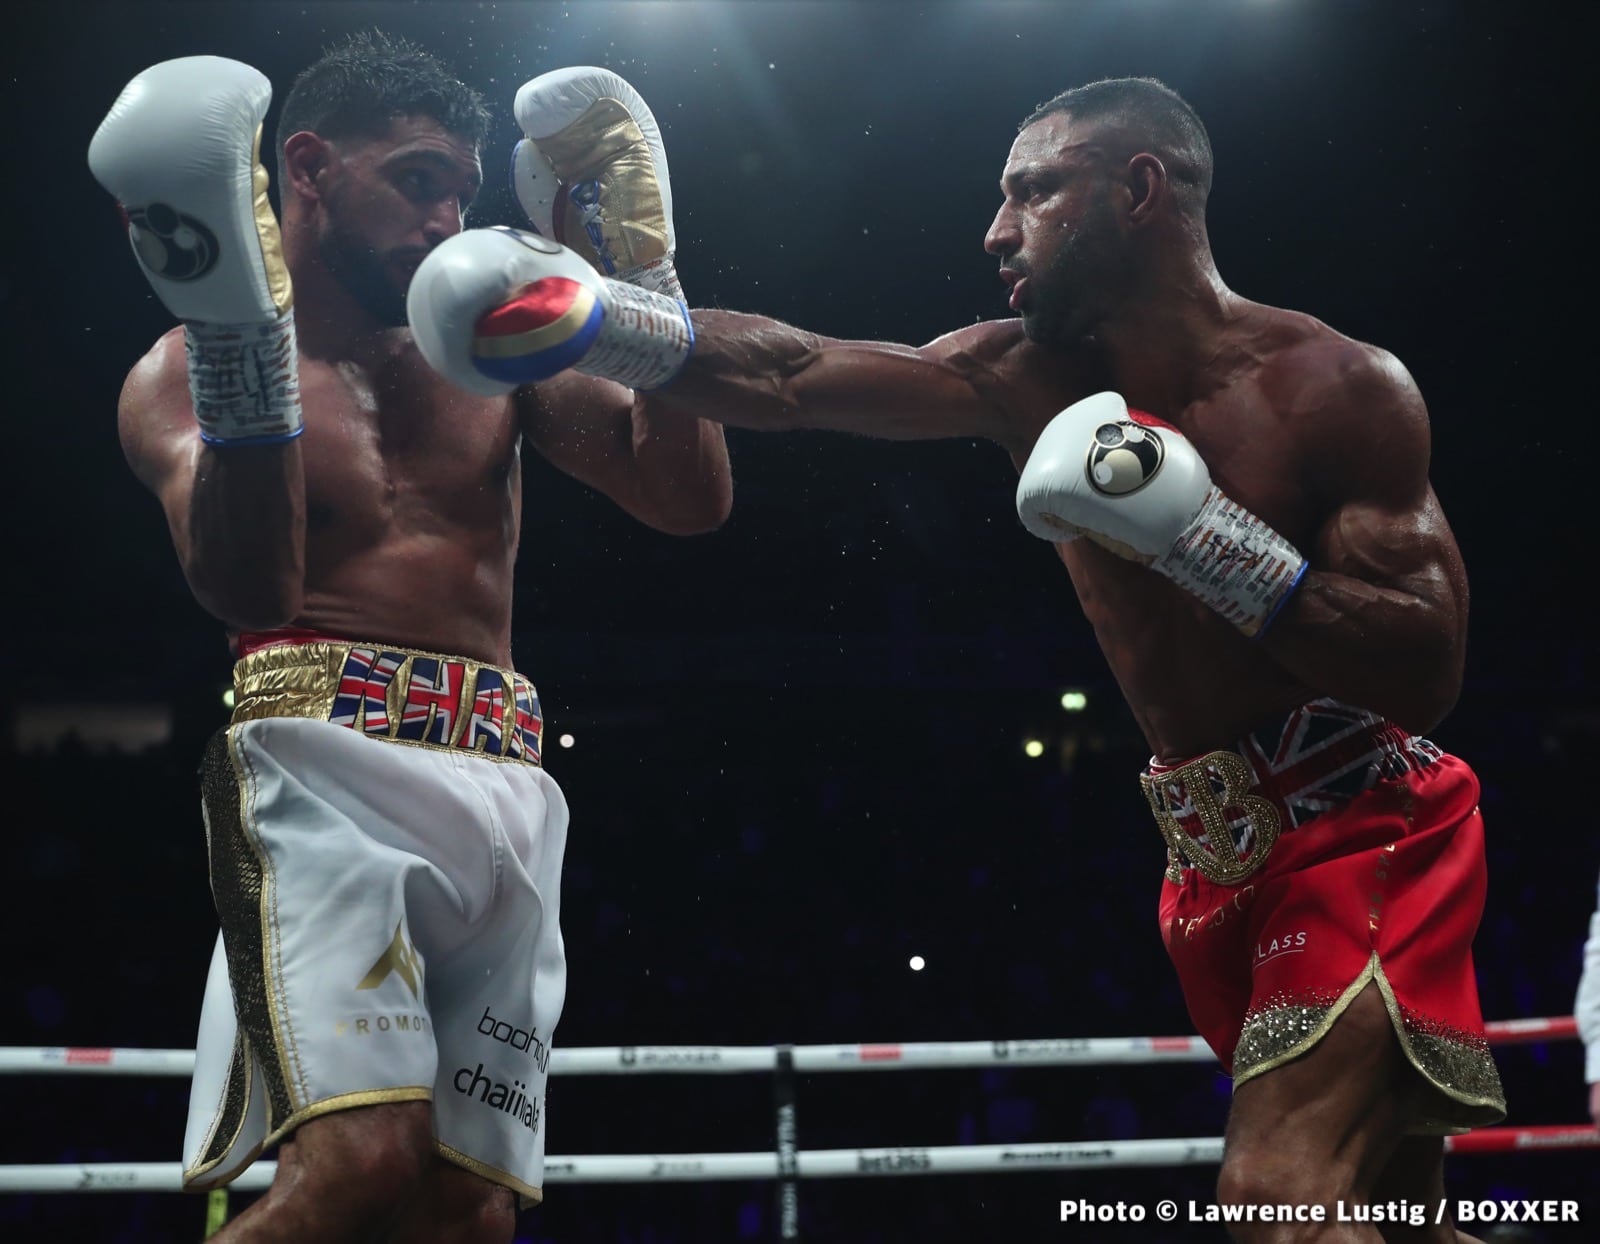 Amir Khan boxing image / photo